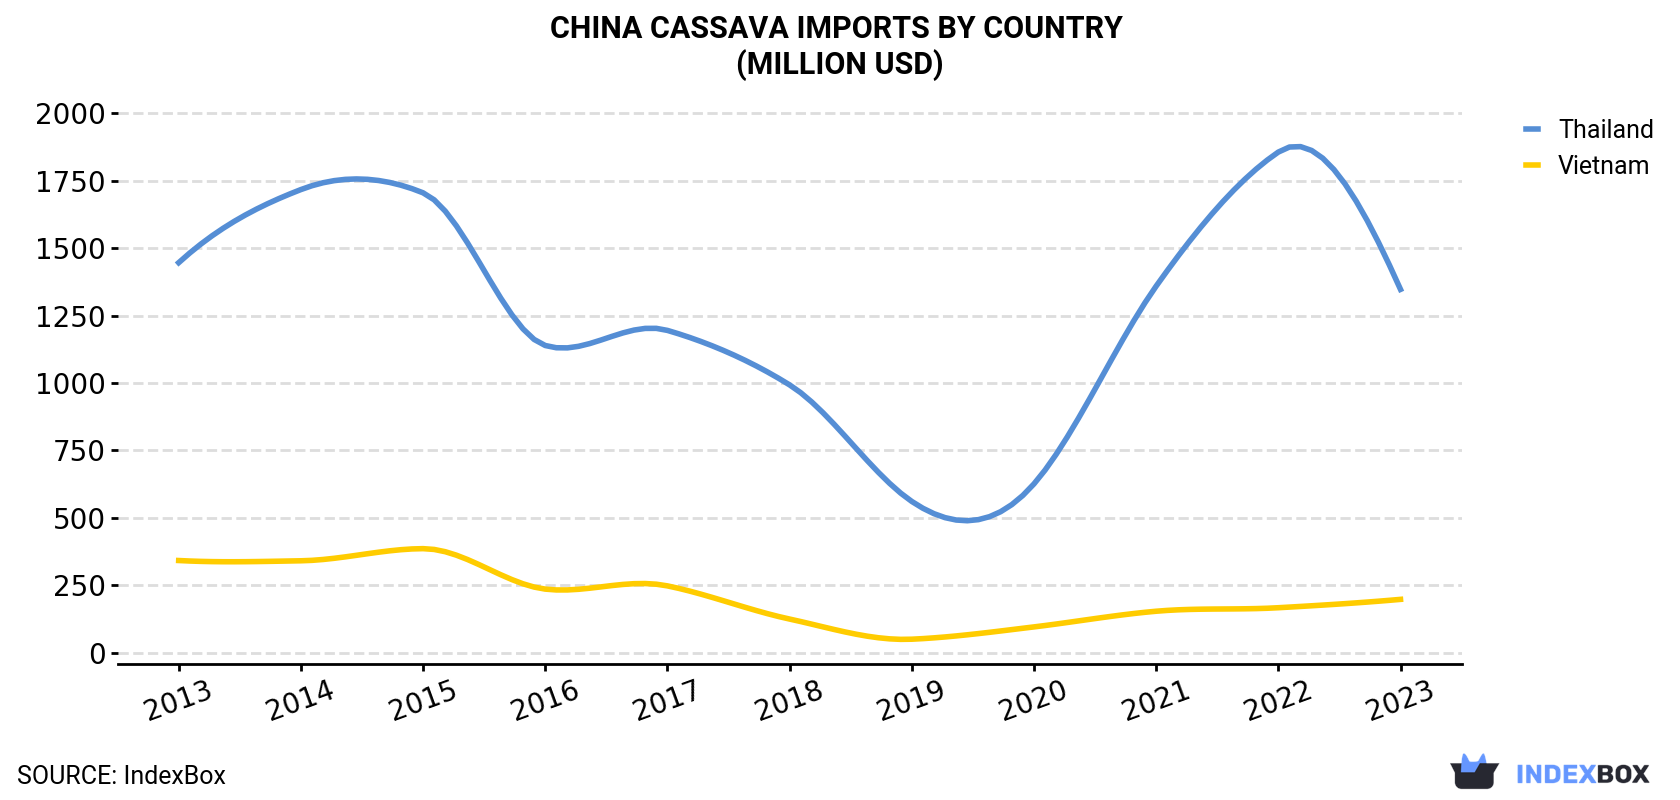 China Cassava Imports By Country (Million USD)